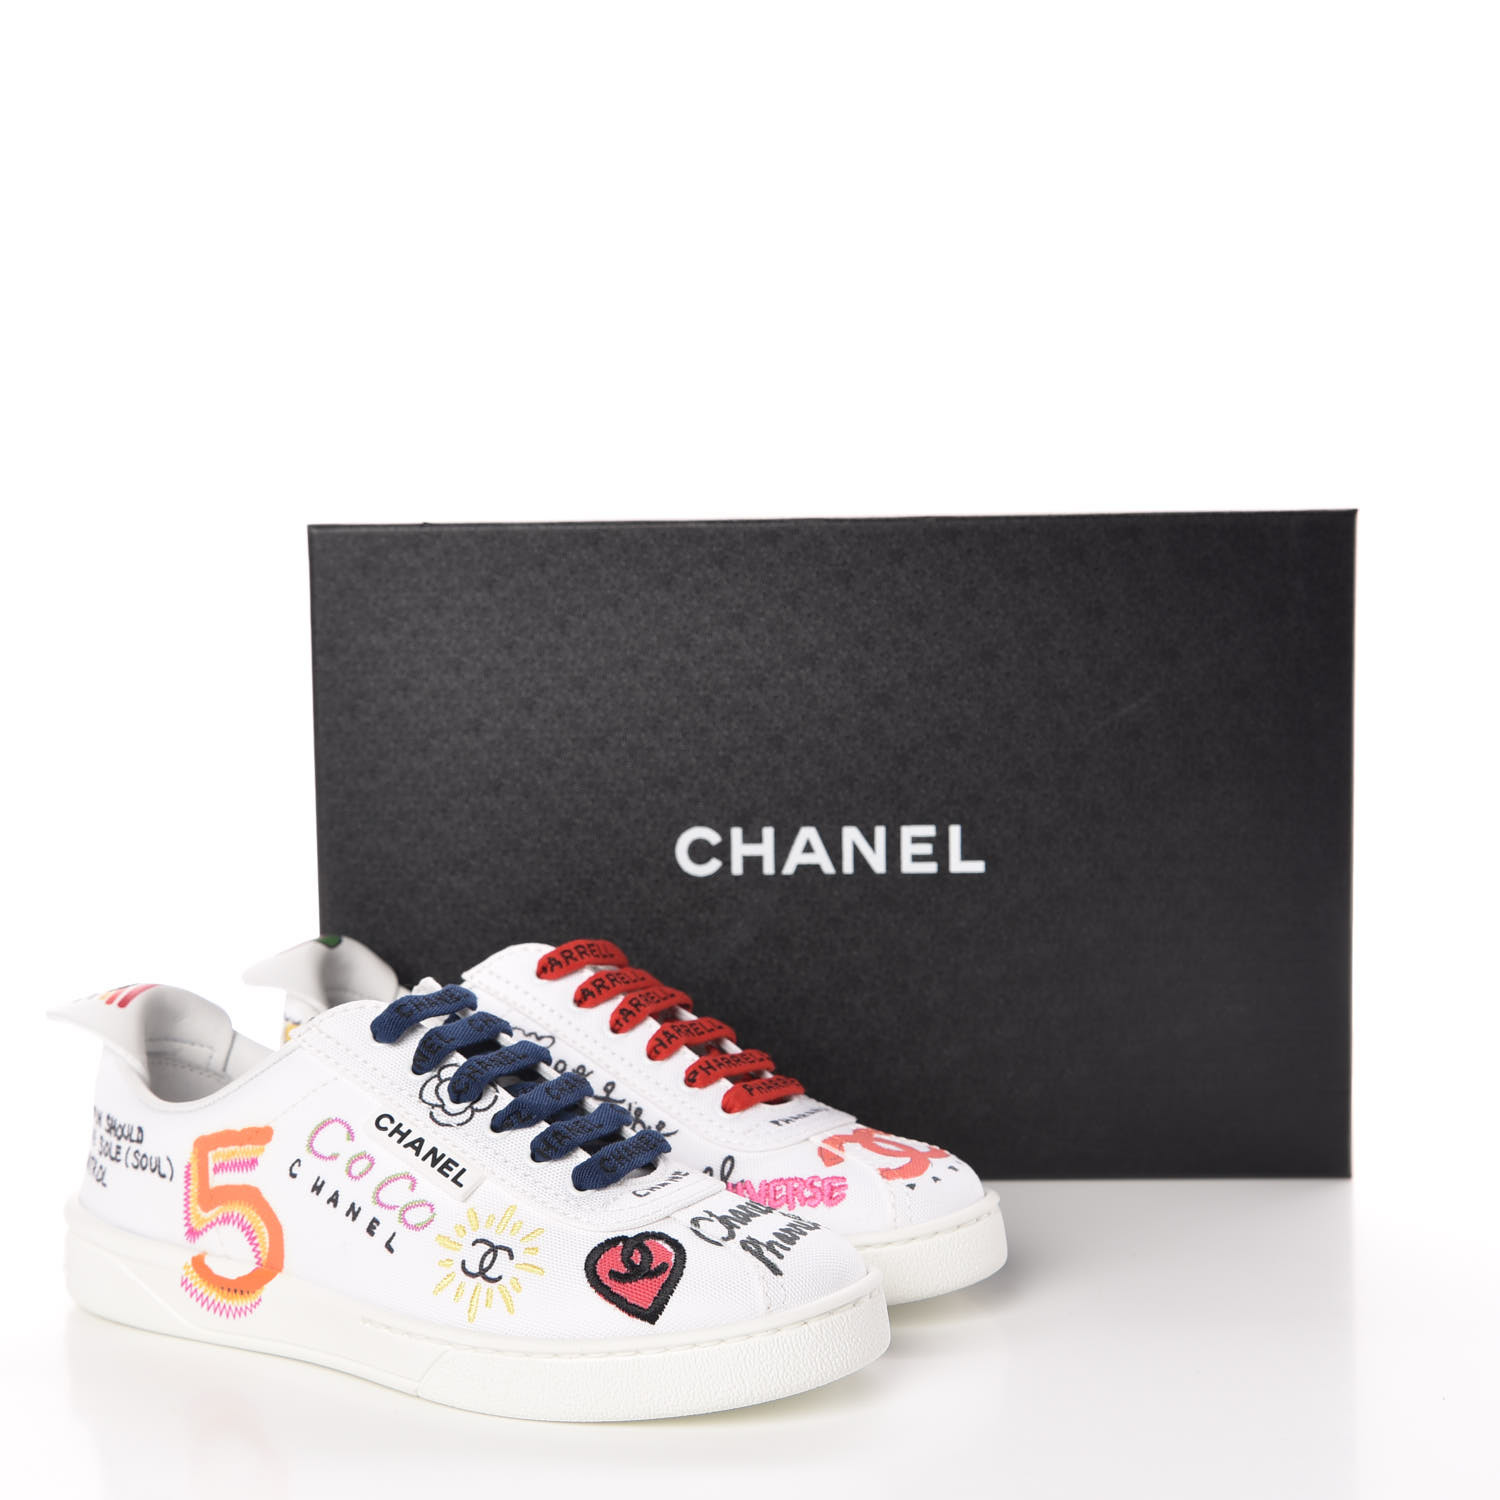 chanel x pharrell williams shoes